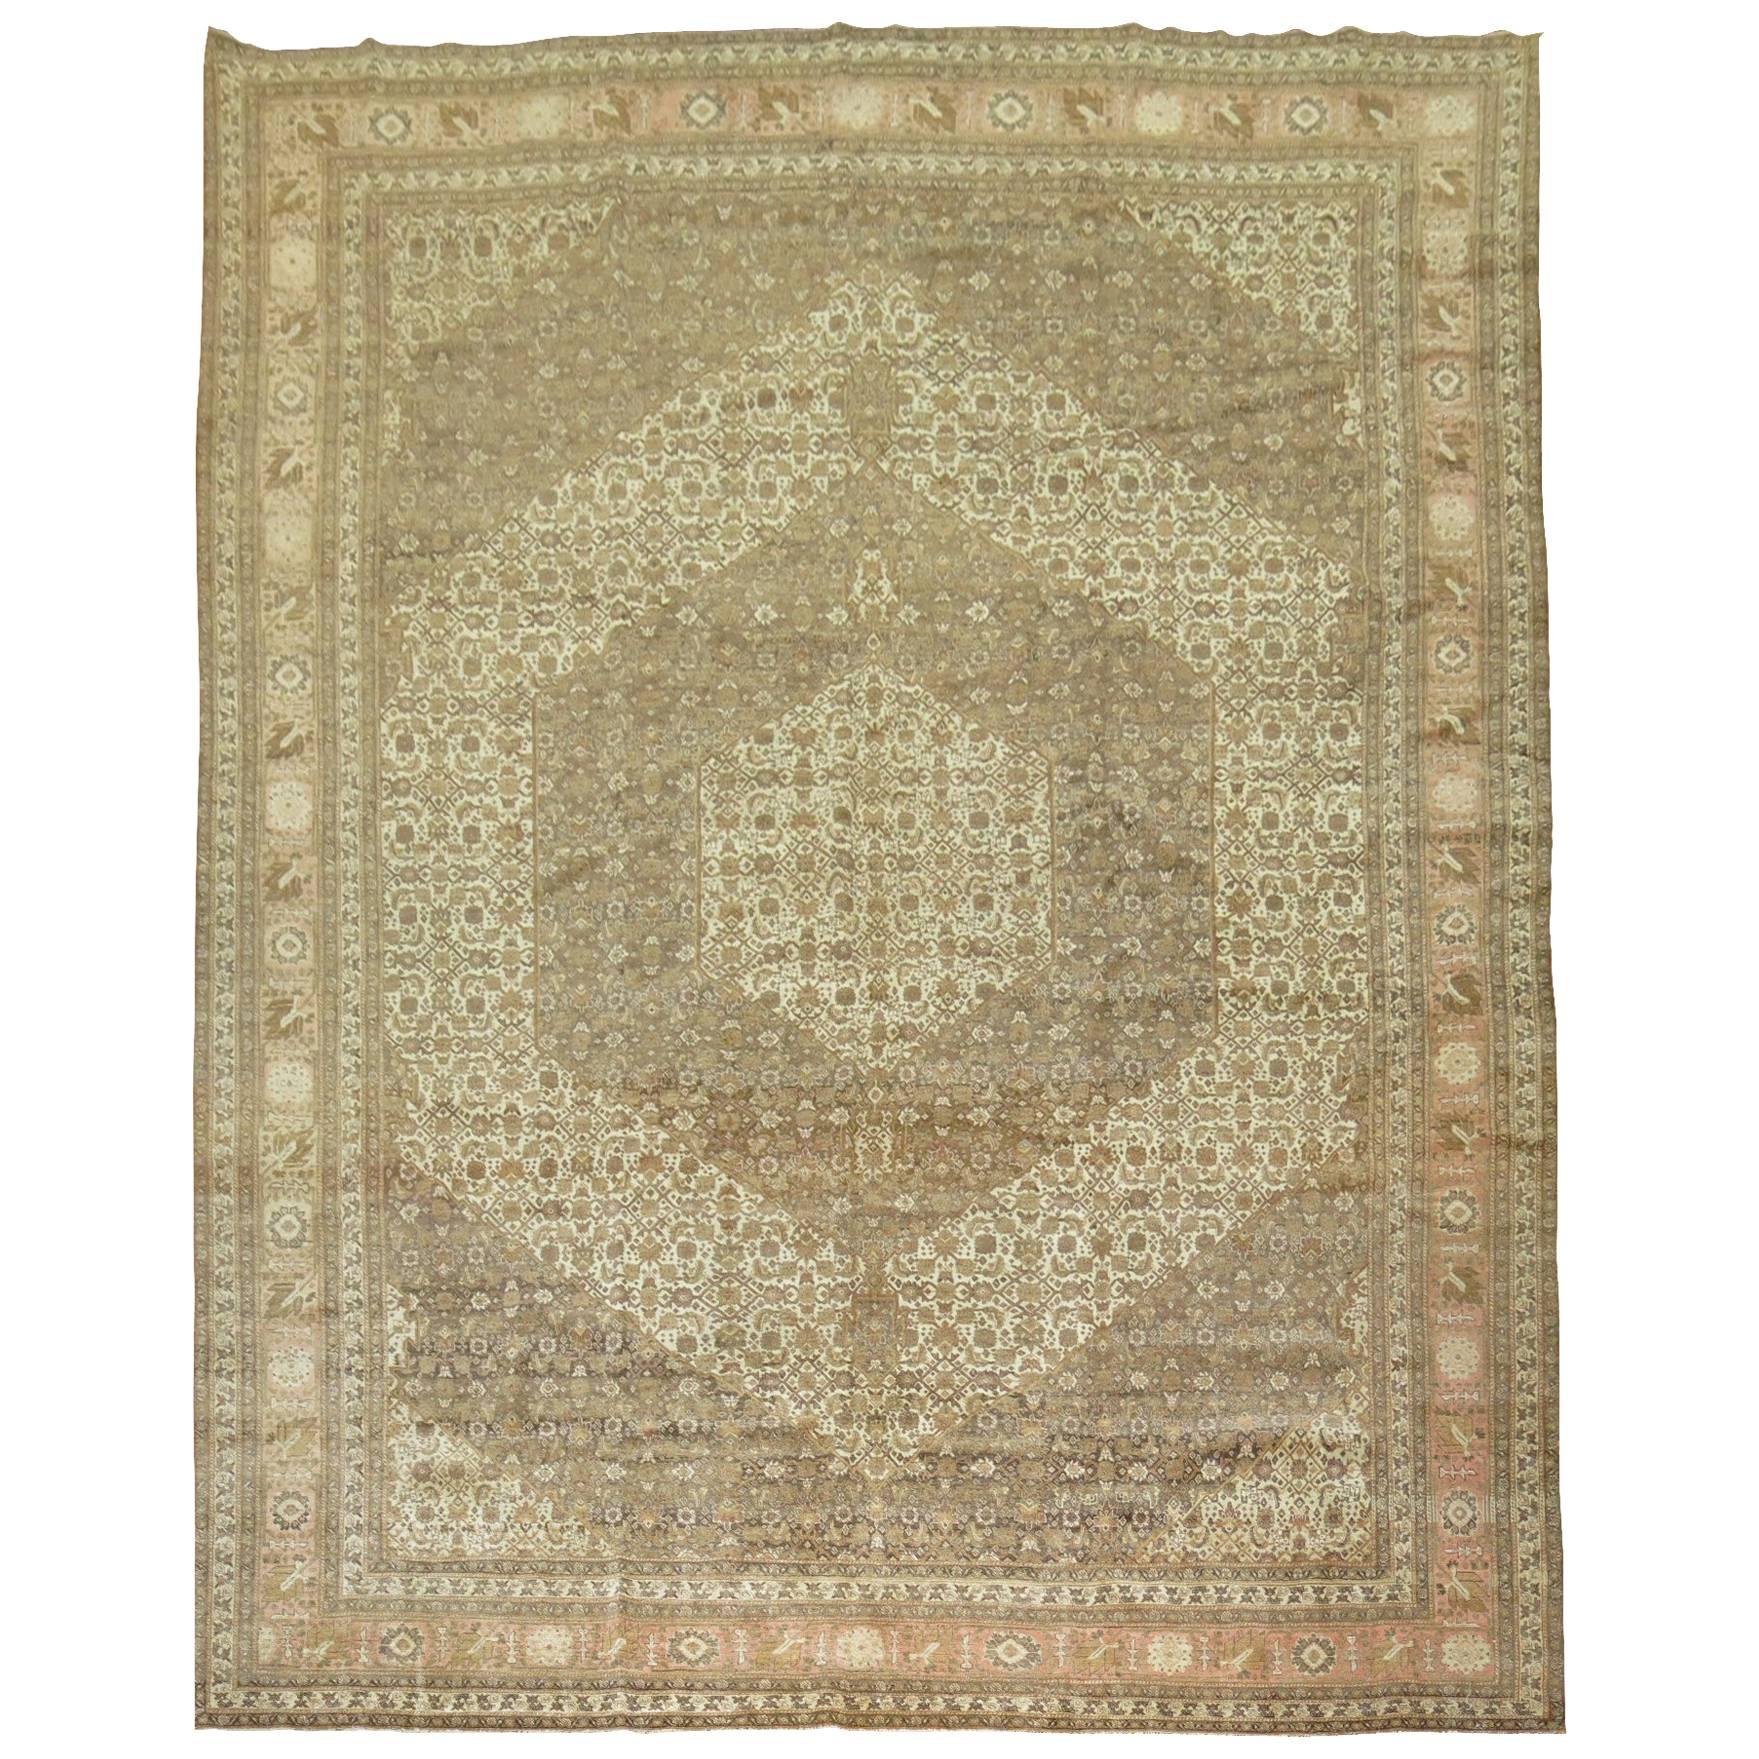 Antique Persian Tabriz Carpet For Sale